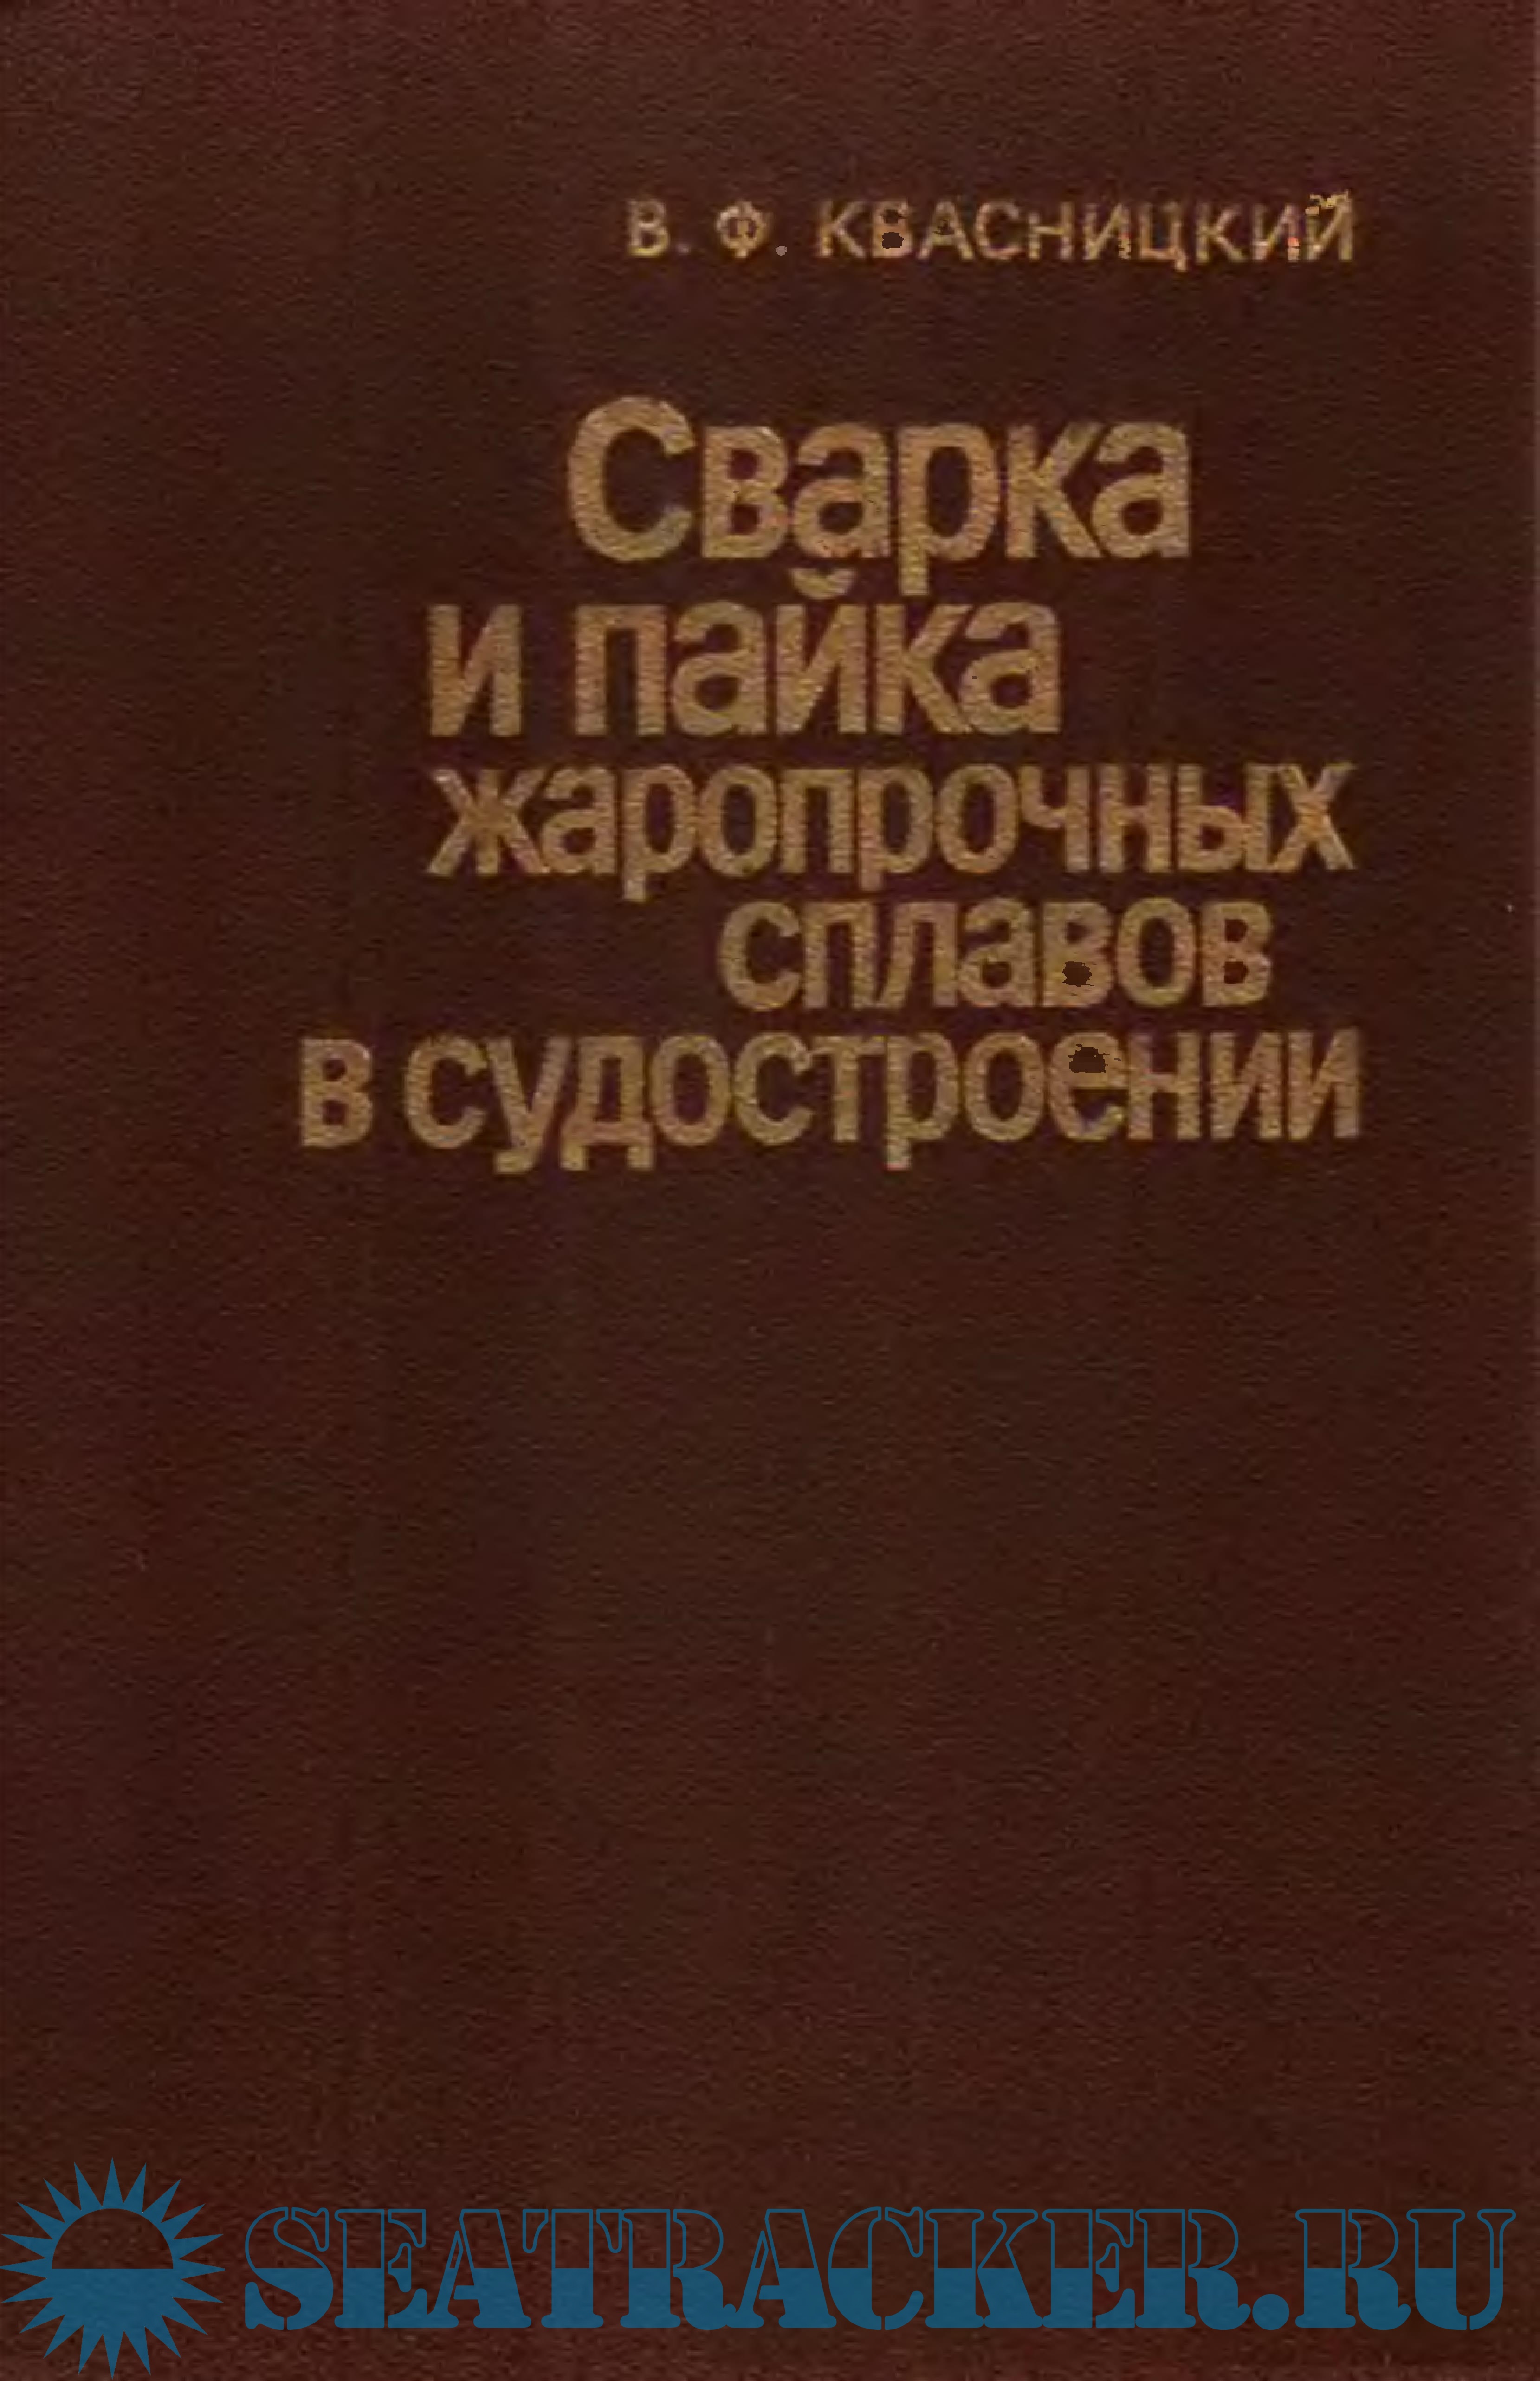 Книги автора Володин В.Я.